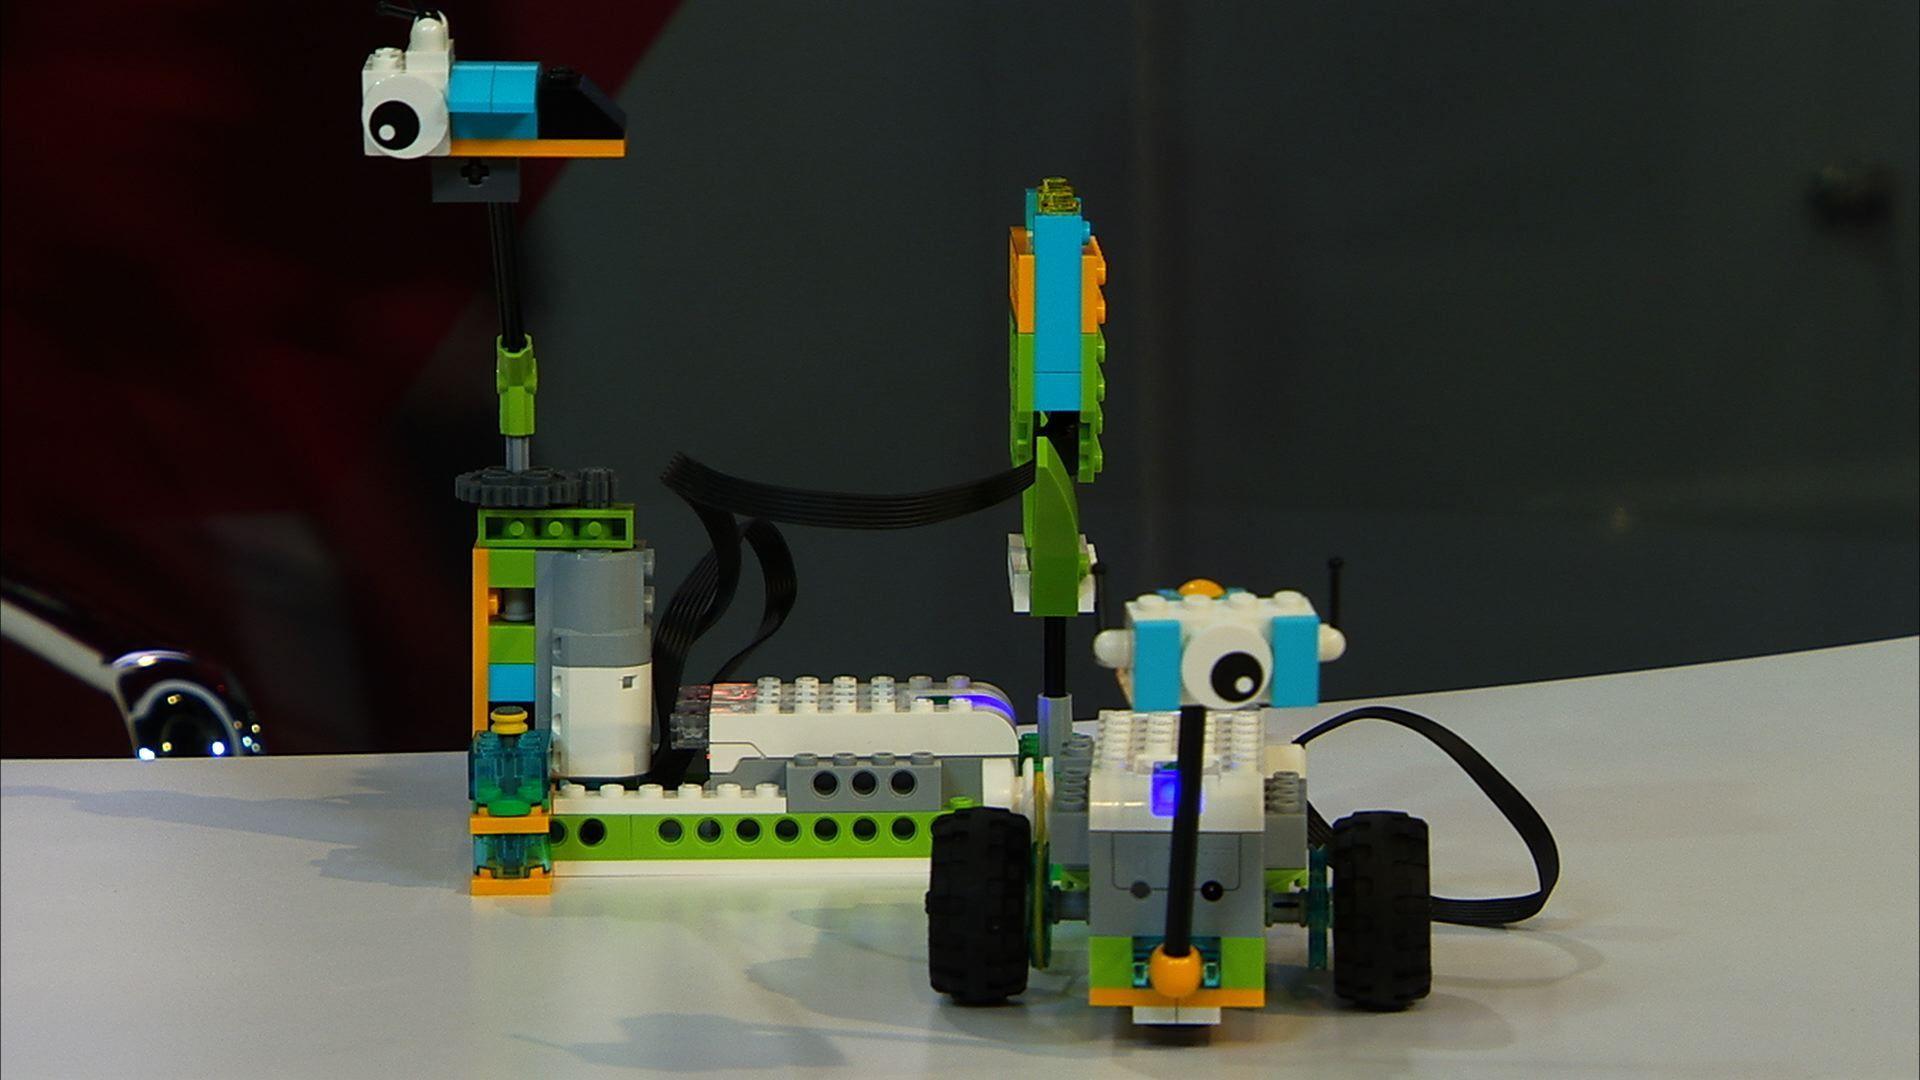 Lego robots scoot into the classroom